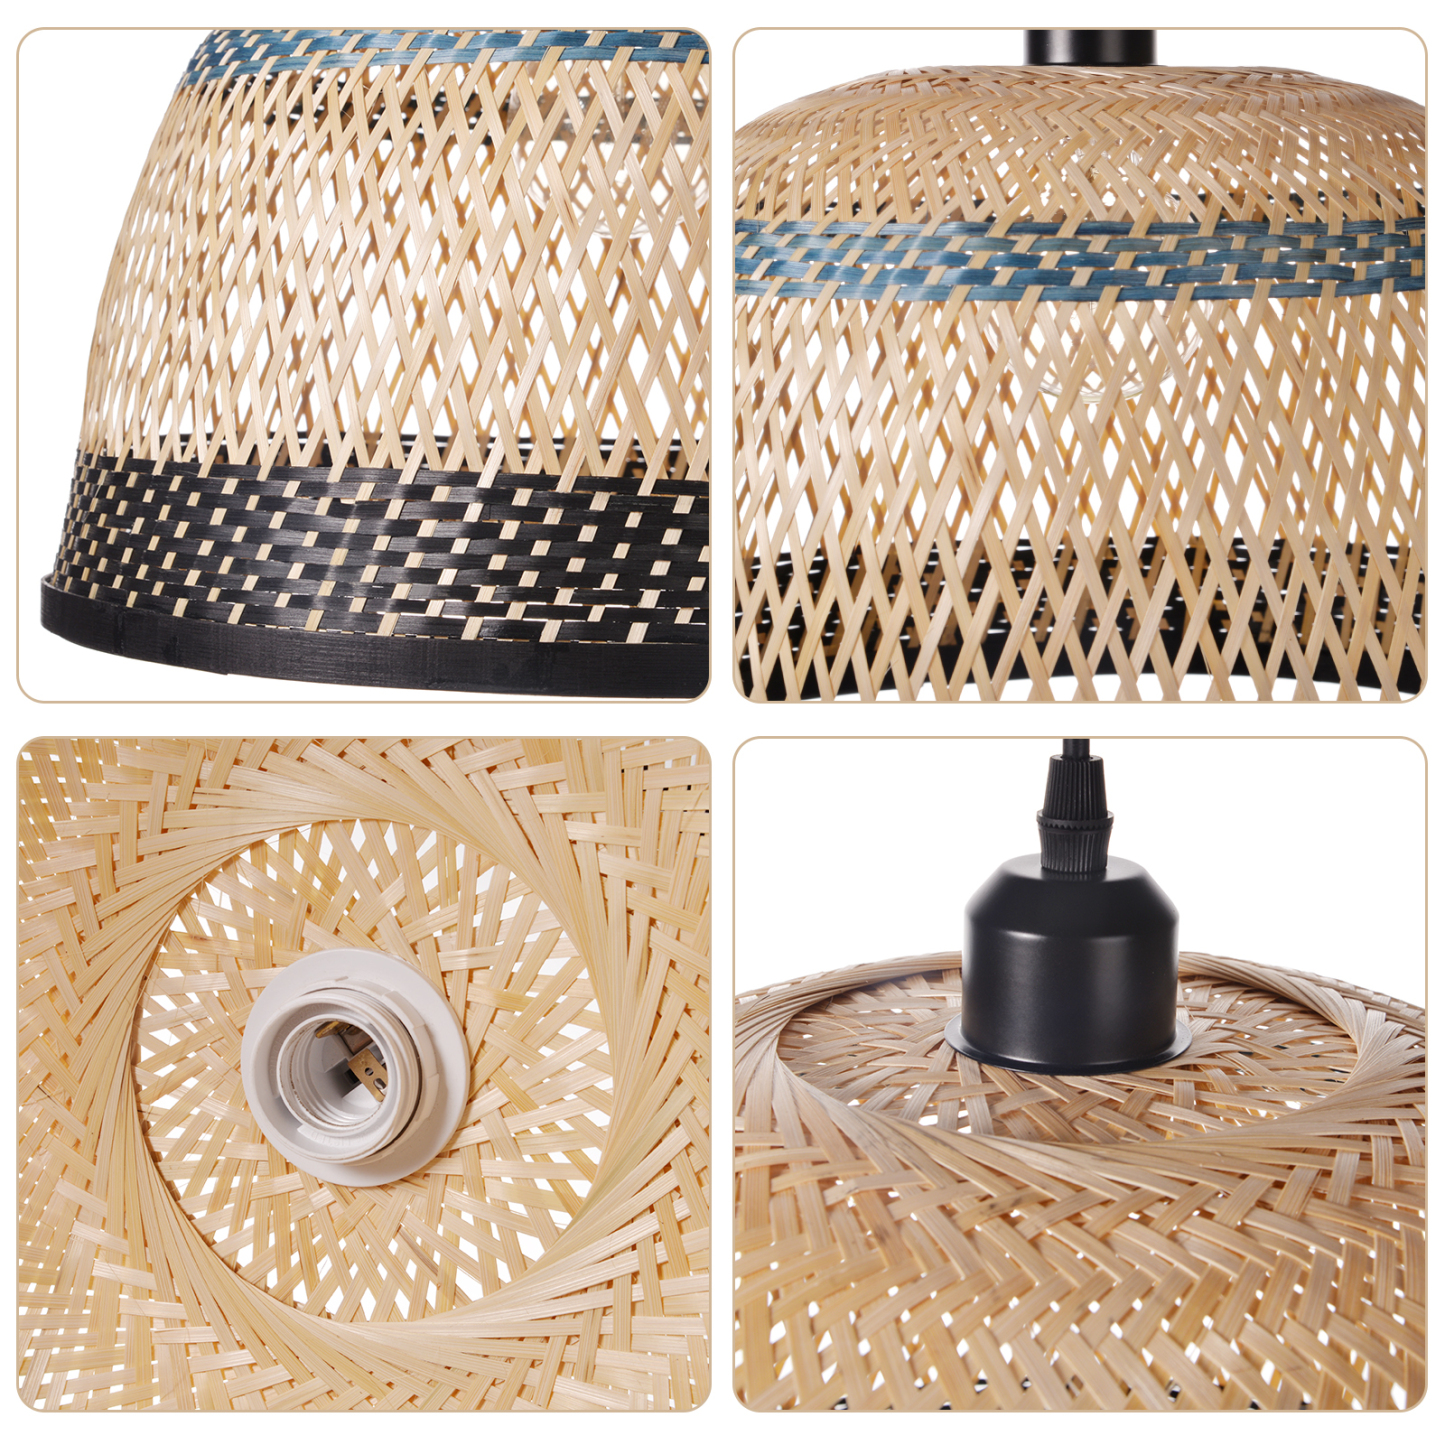 Basket shaped Blue and Black striped bamboo pendant light